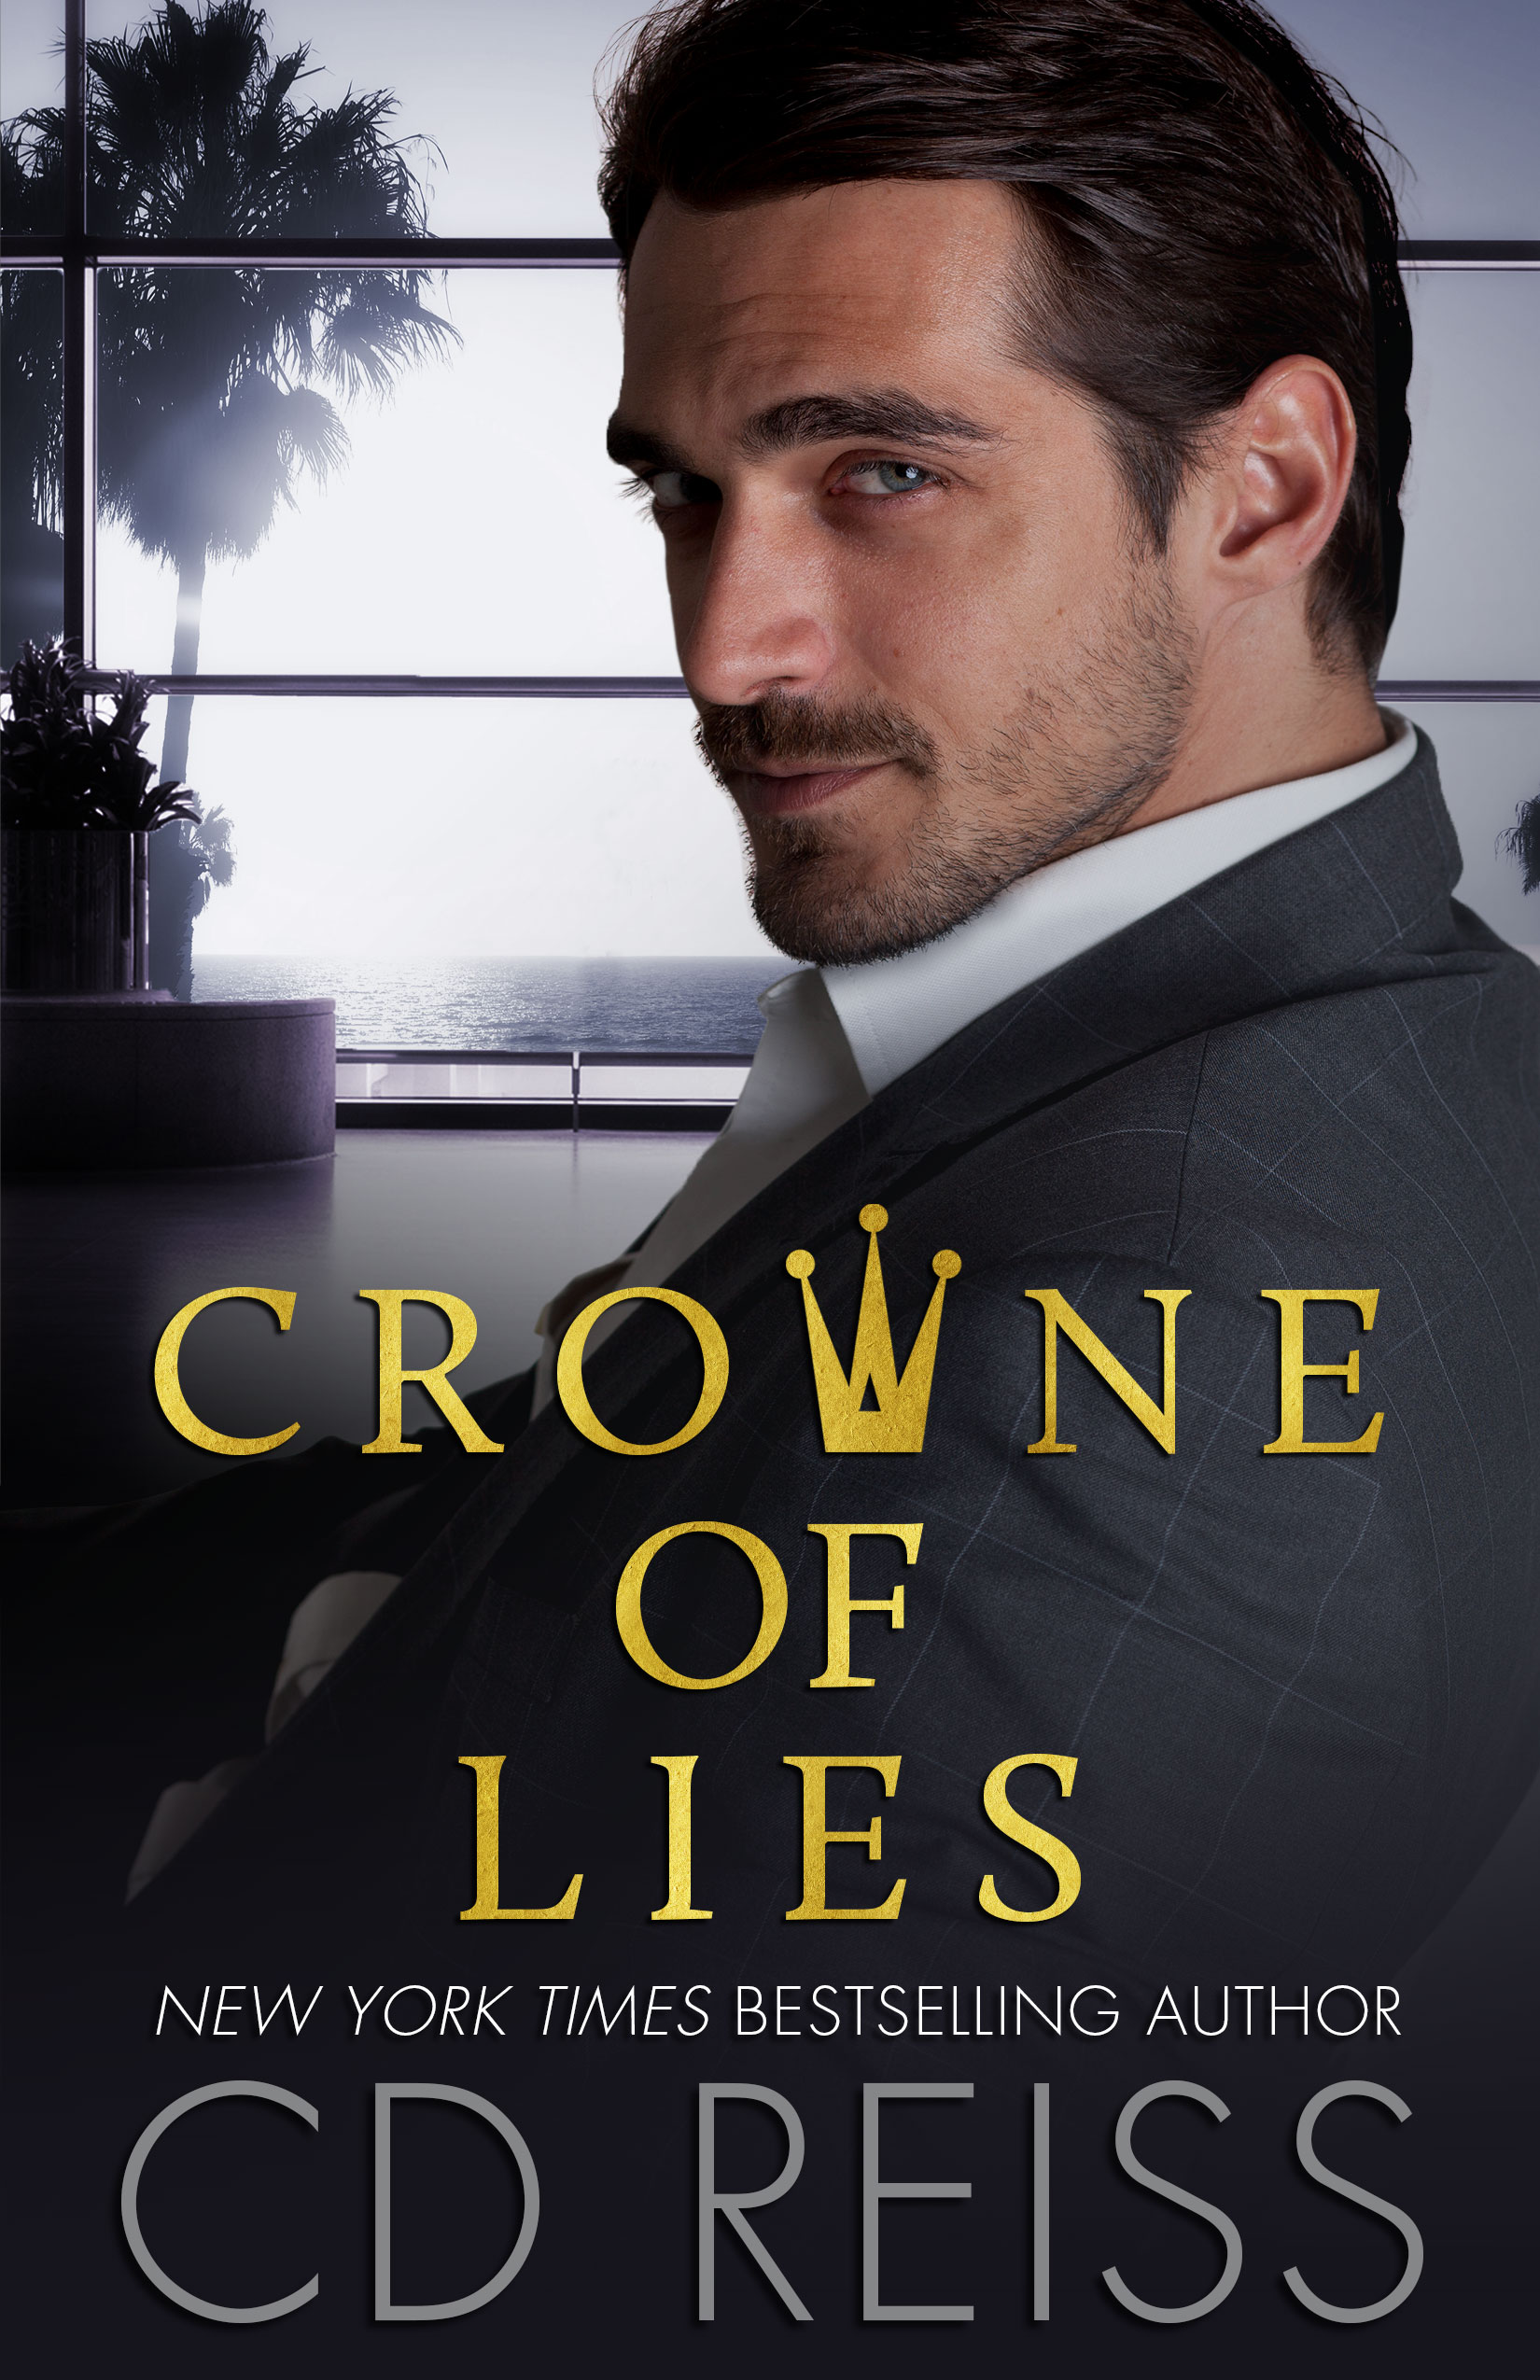 Crowne-of-Lies-cover-FULLRES-1